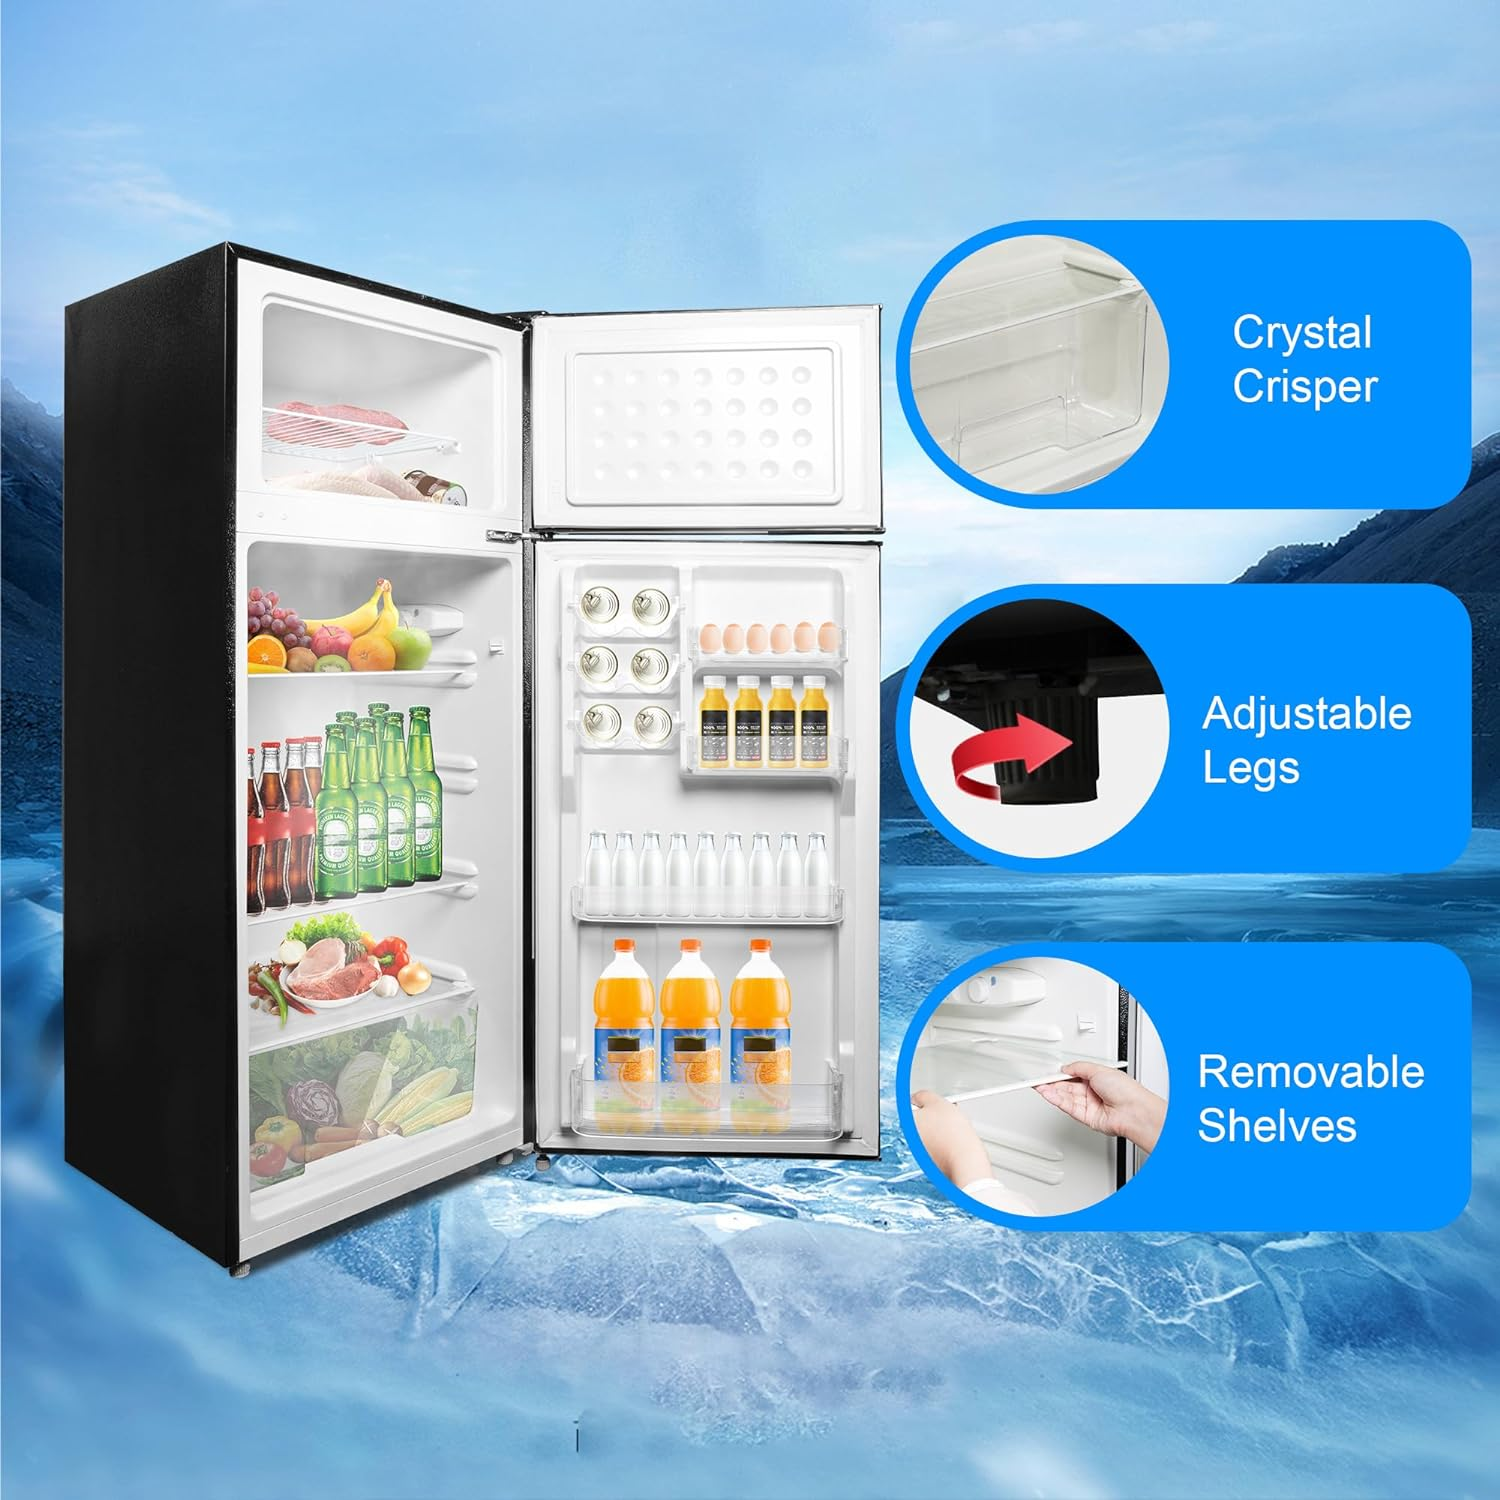 7.7 Cu Ft Mini Fridge with Freezer, Double Door Apartment Size Refrigerator